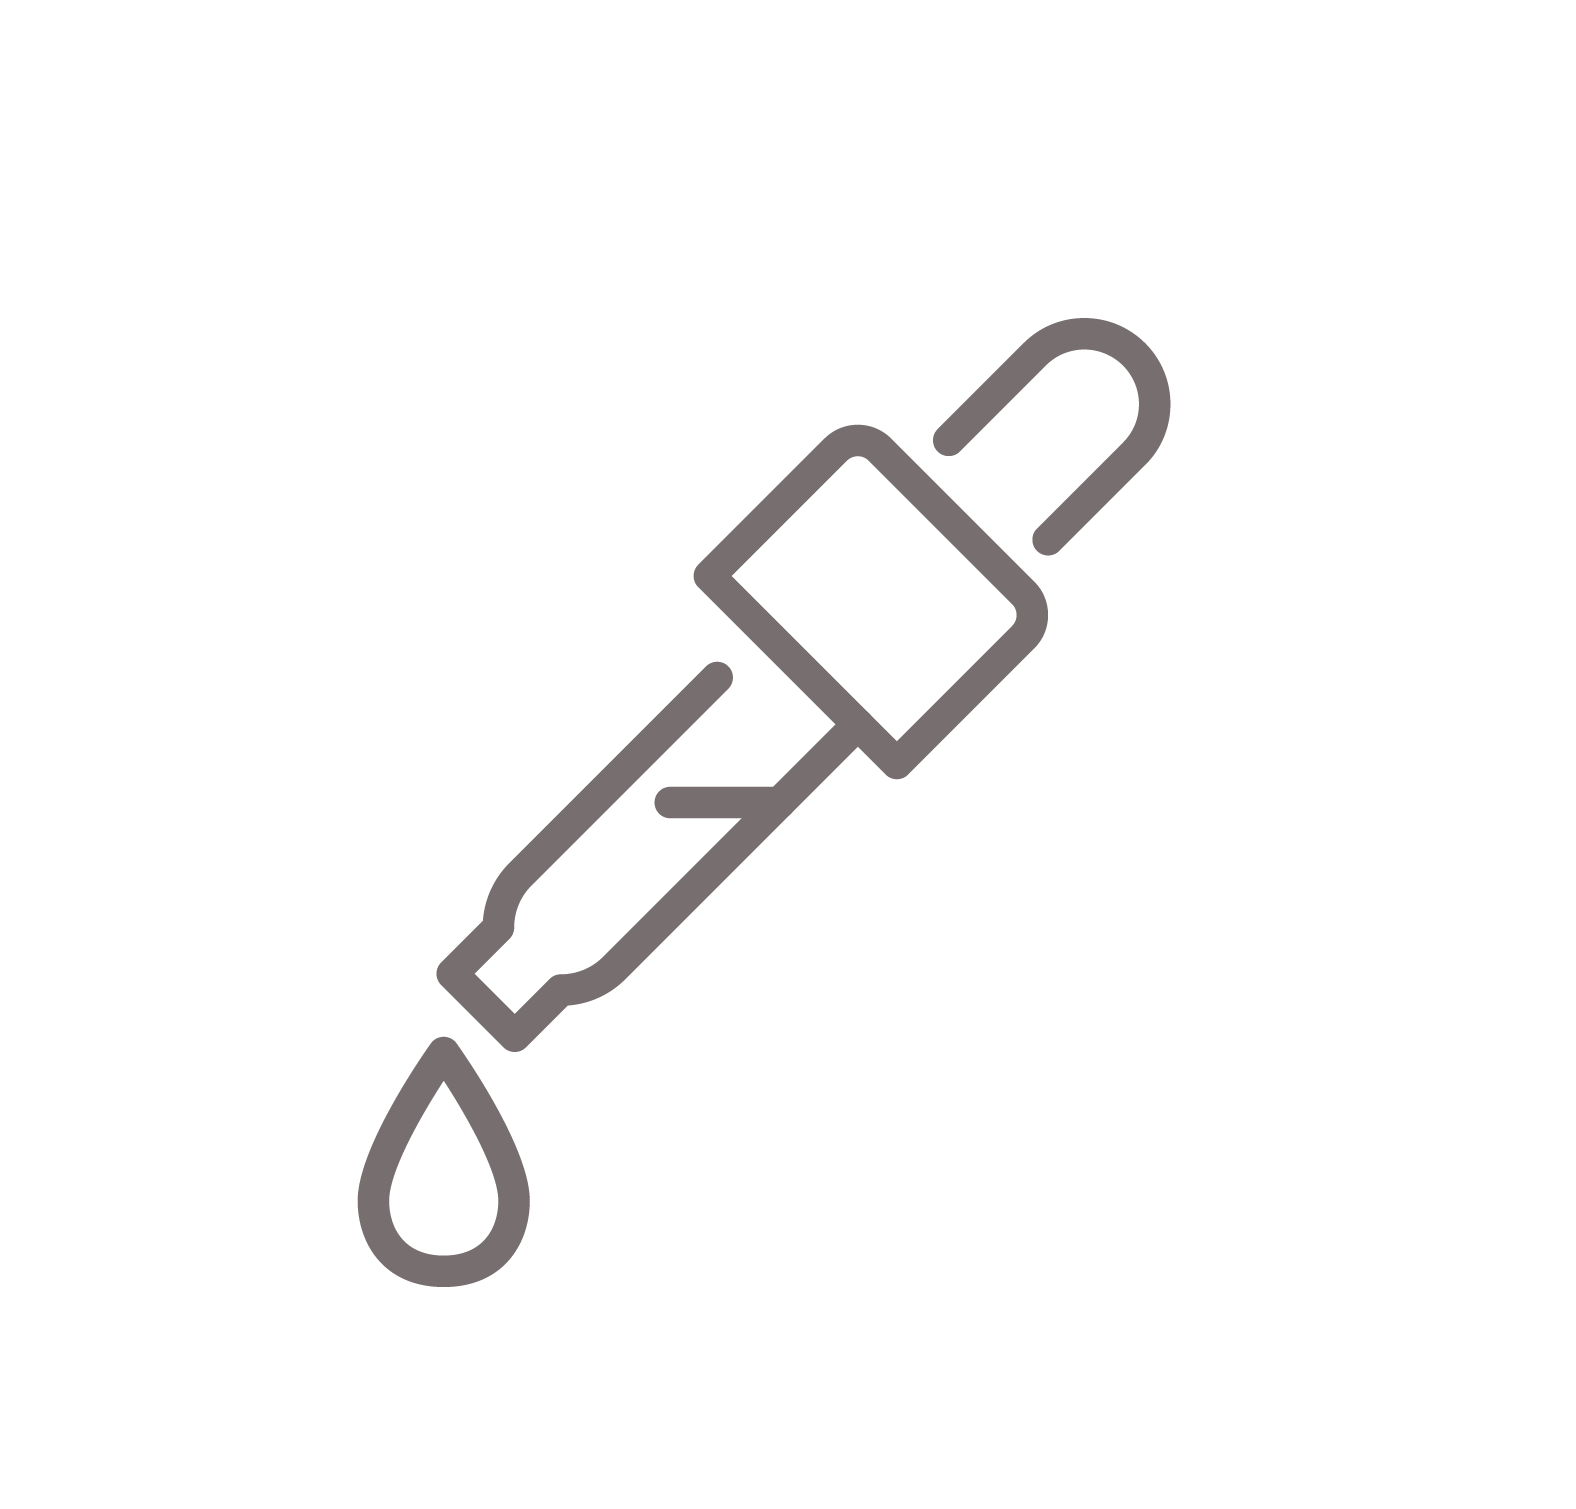 icon showing a medicine dropper